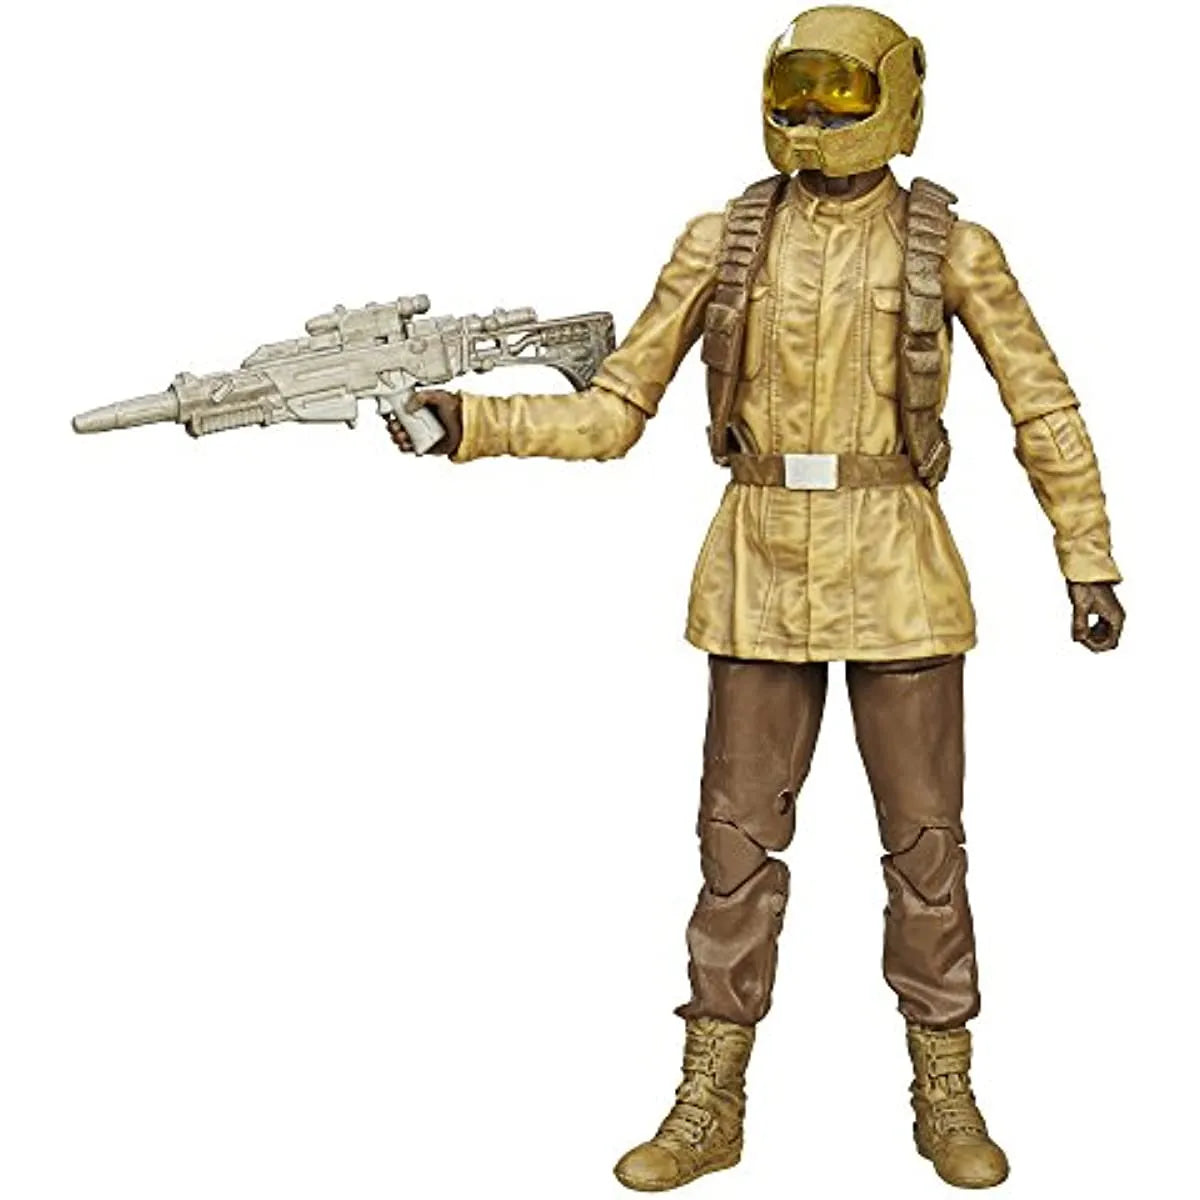 Figurine Star Wars Resistance Trooper